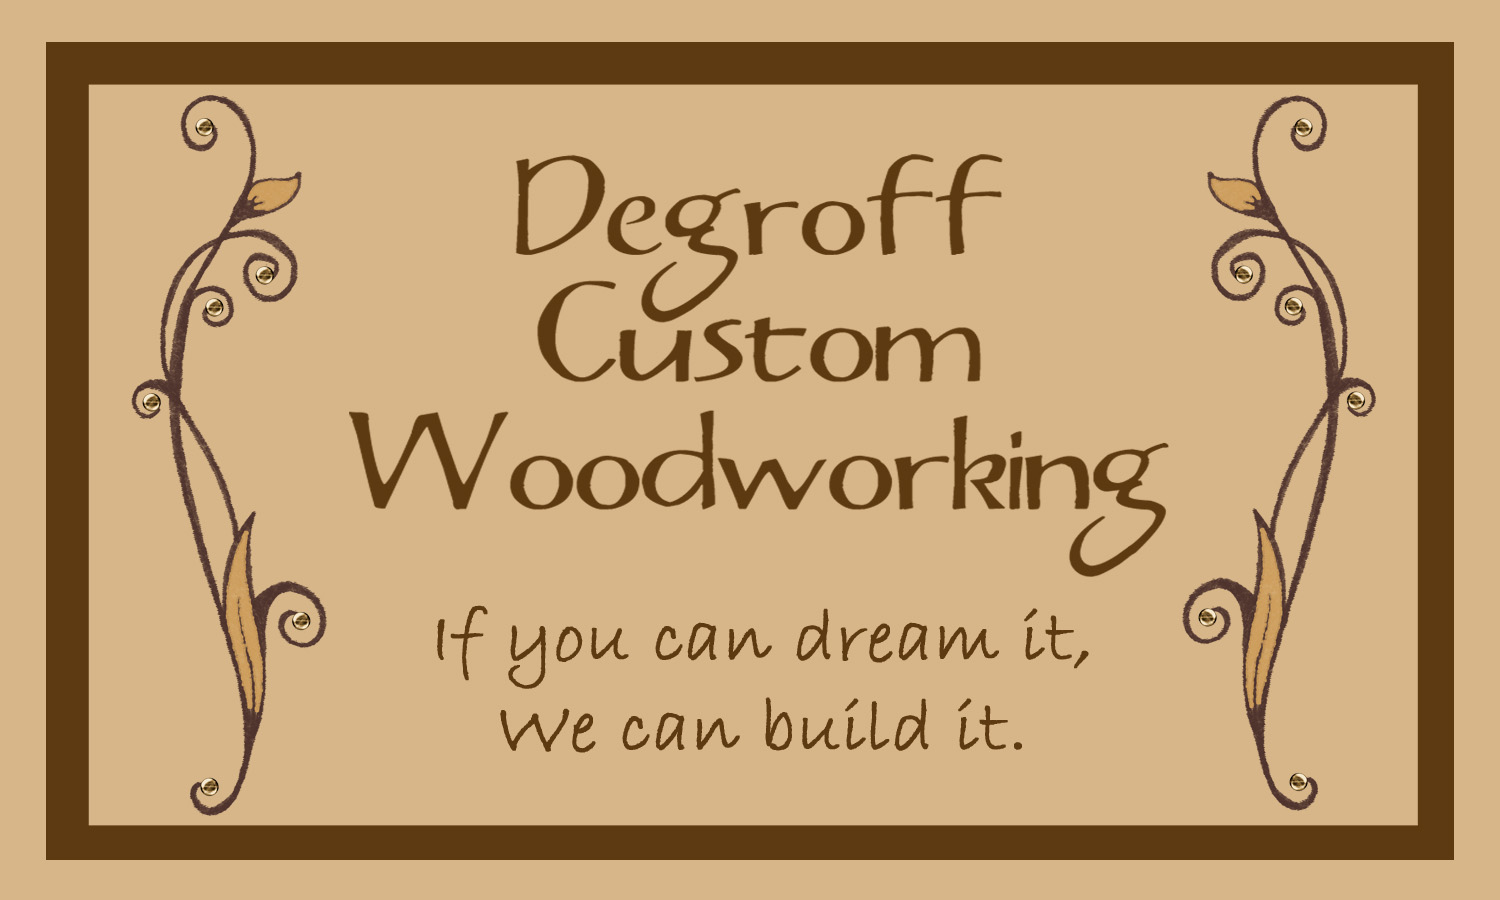 DeGroff Custom Woodworking